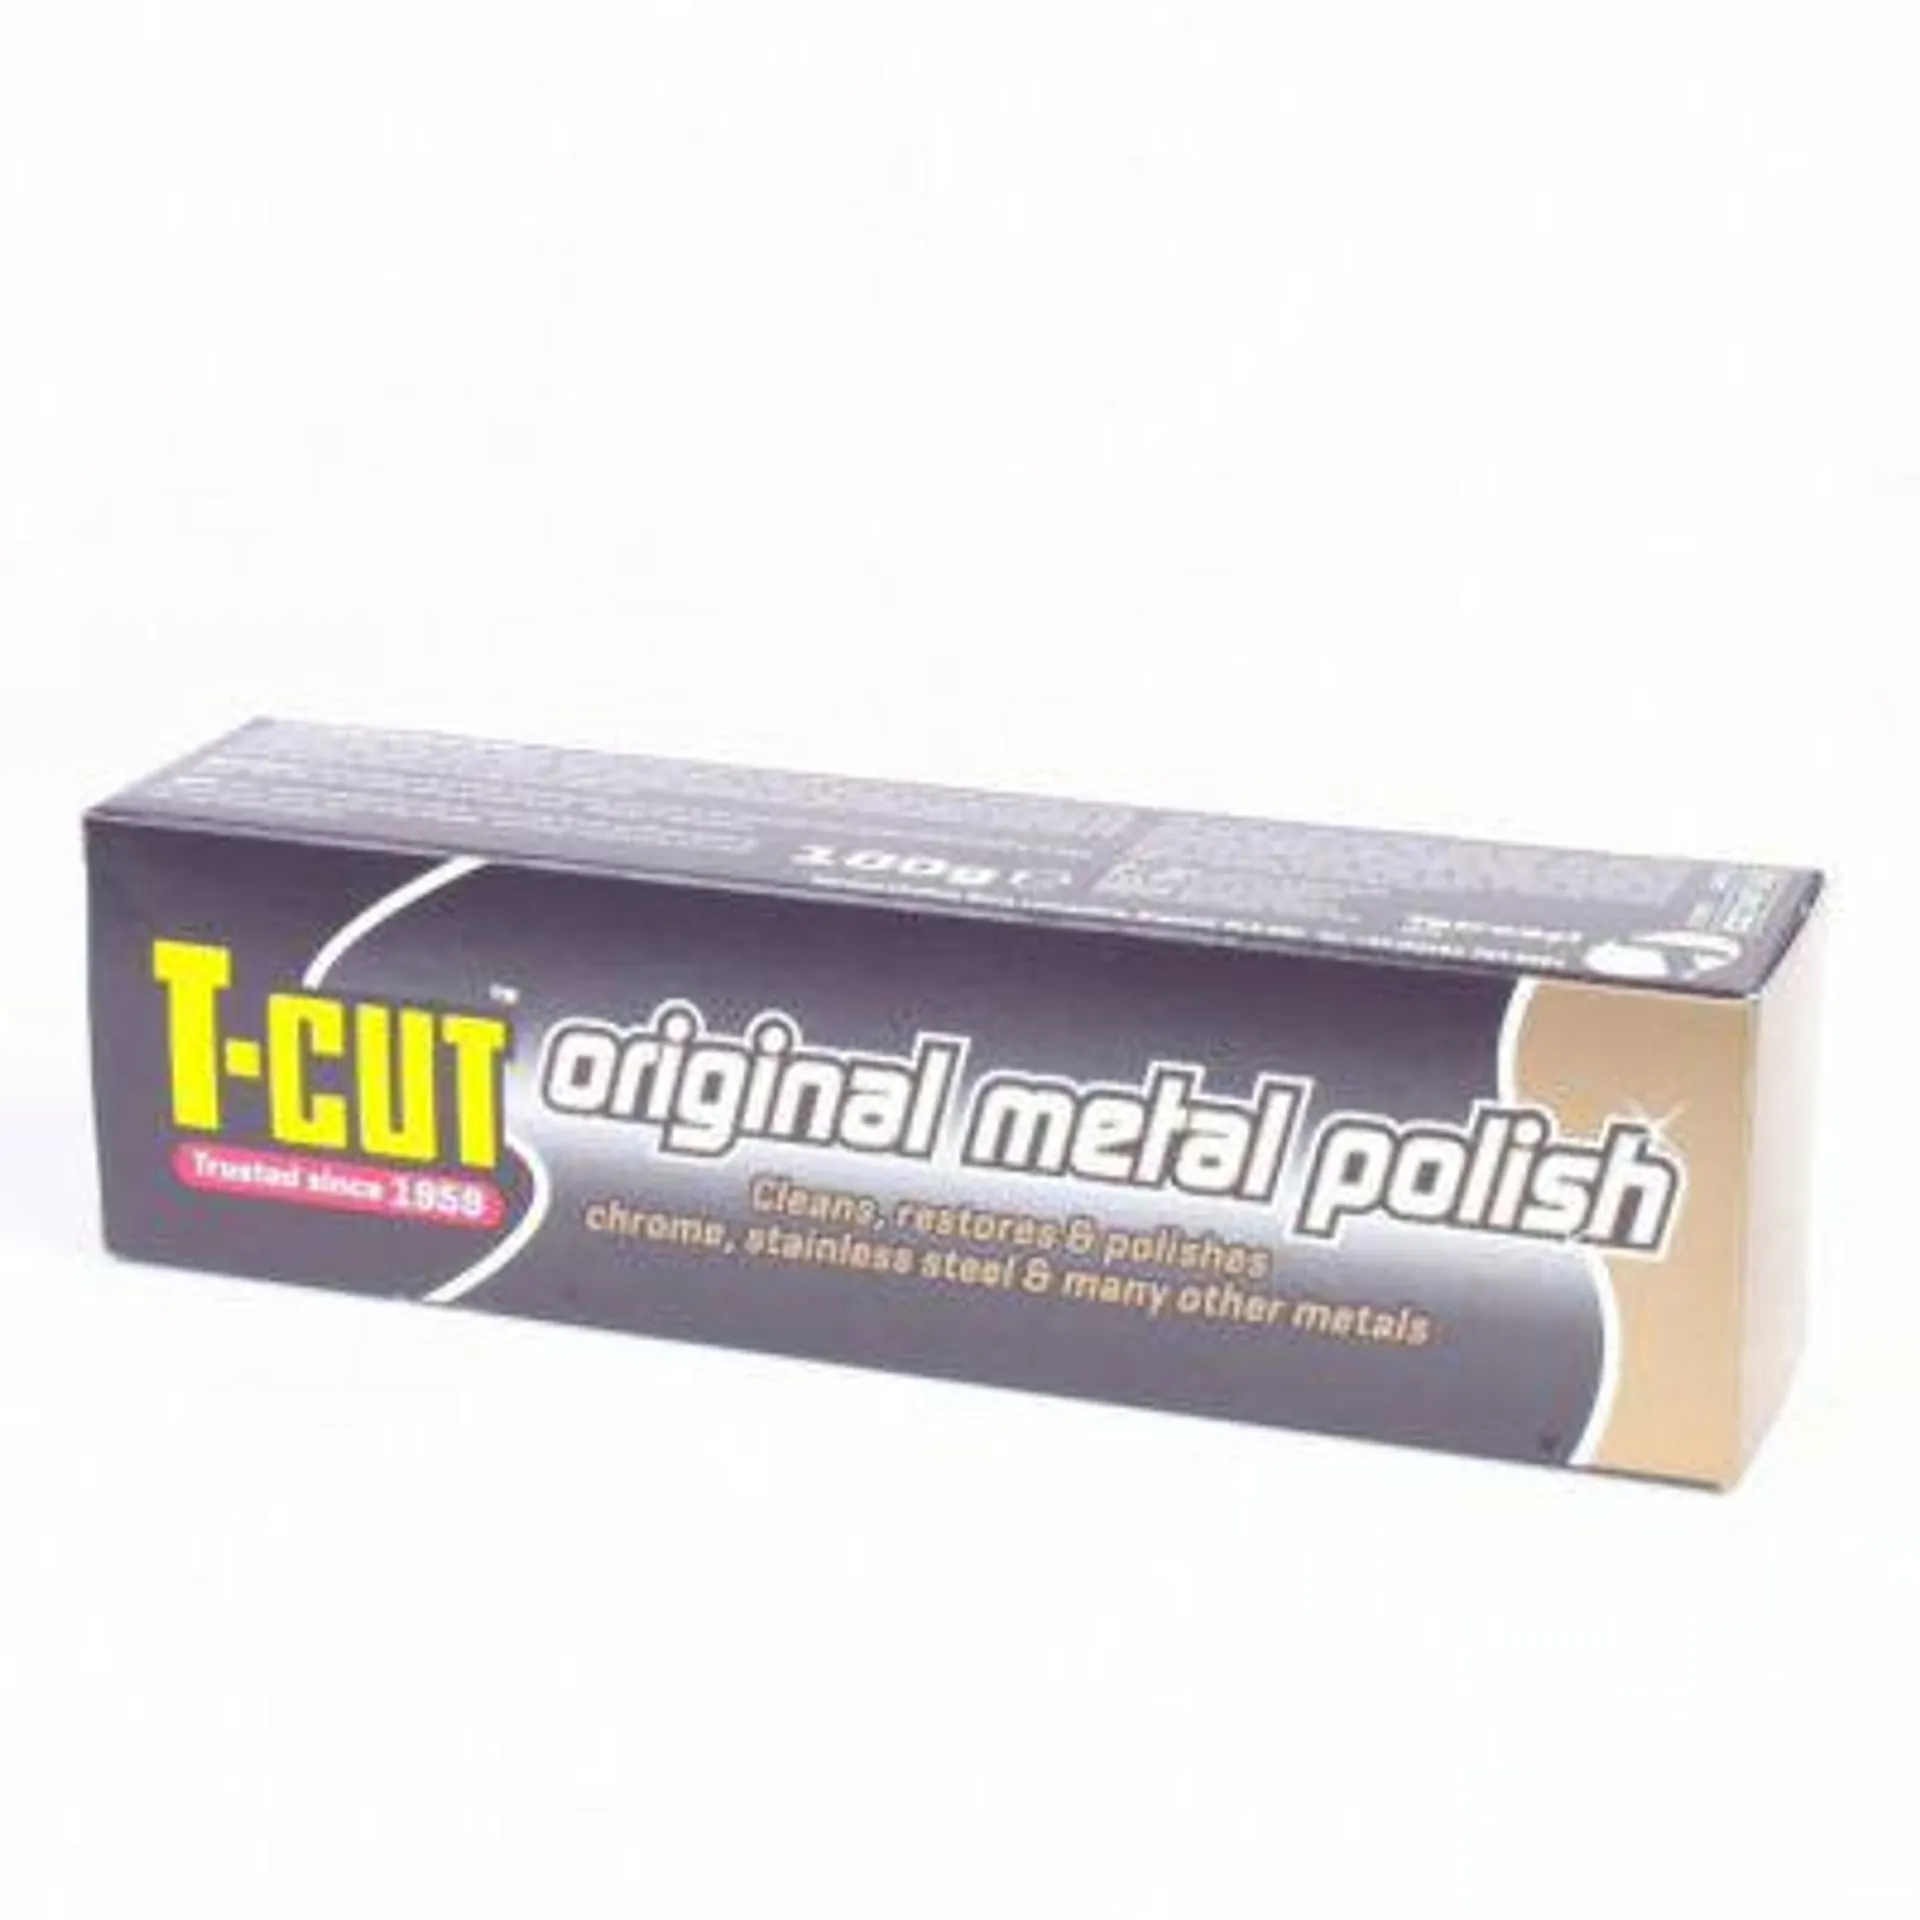 tetrosyl t-cut metal polish